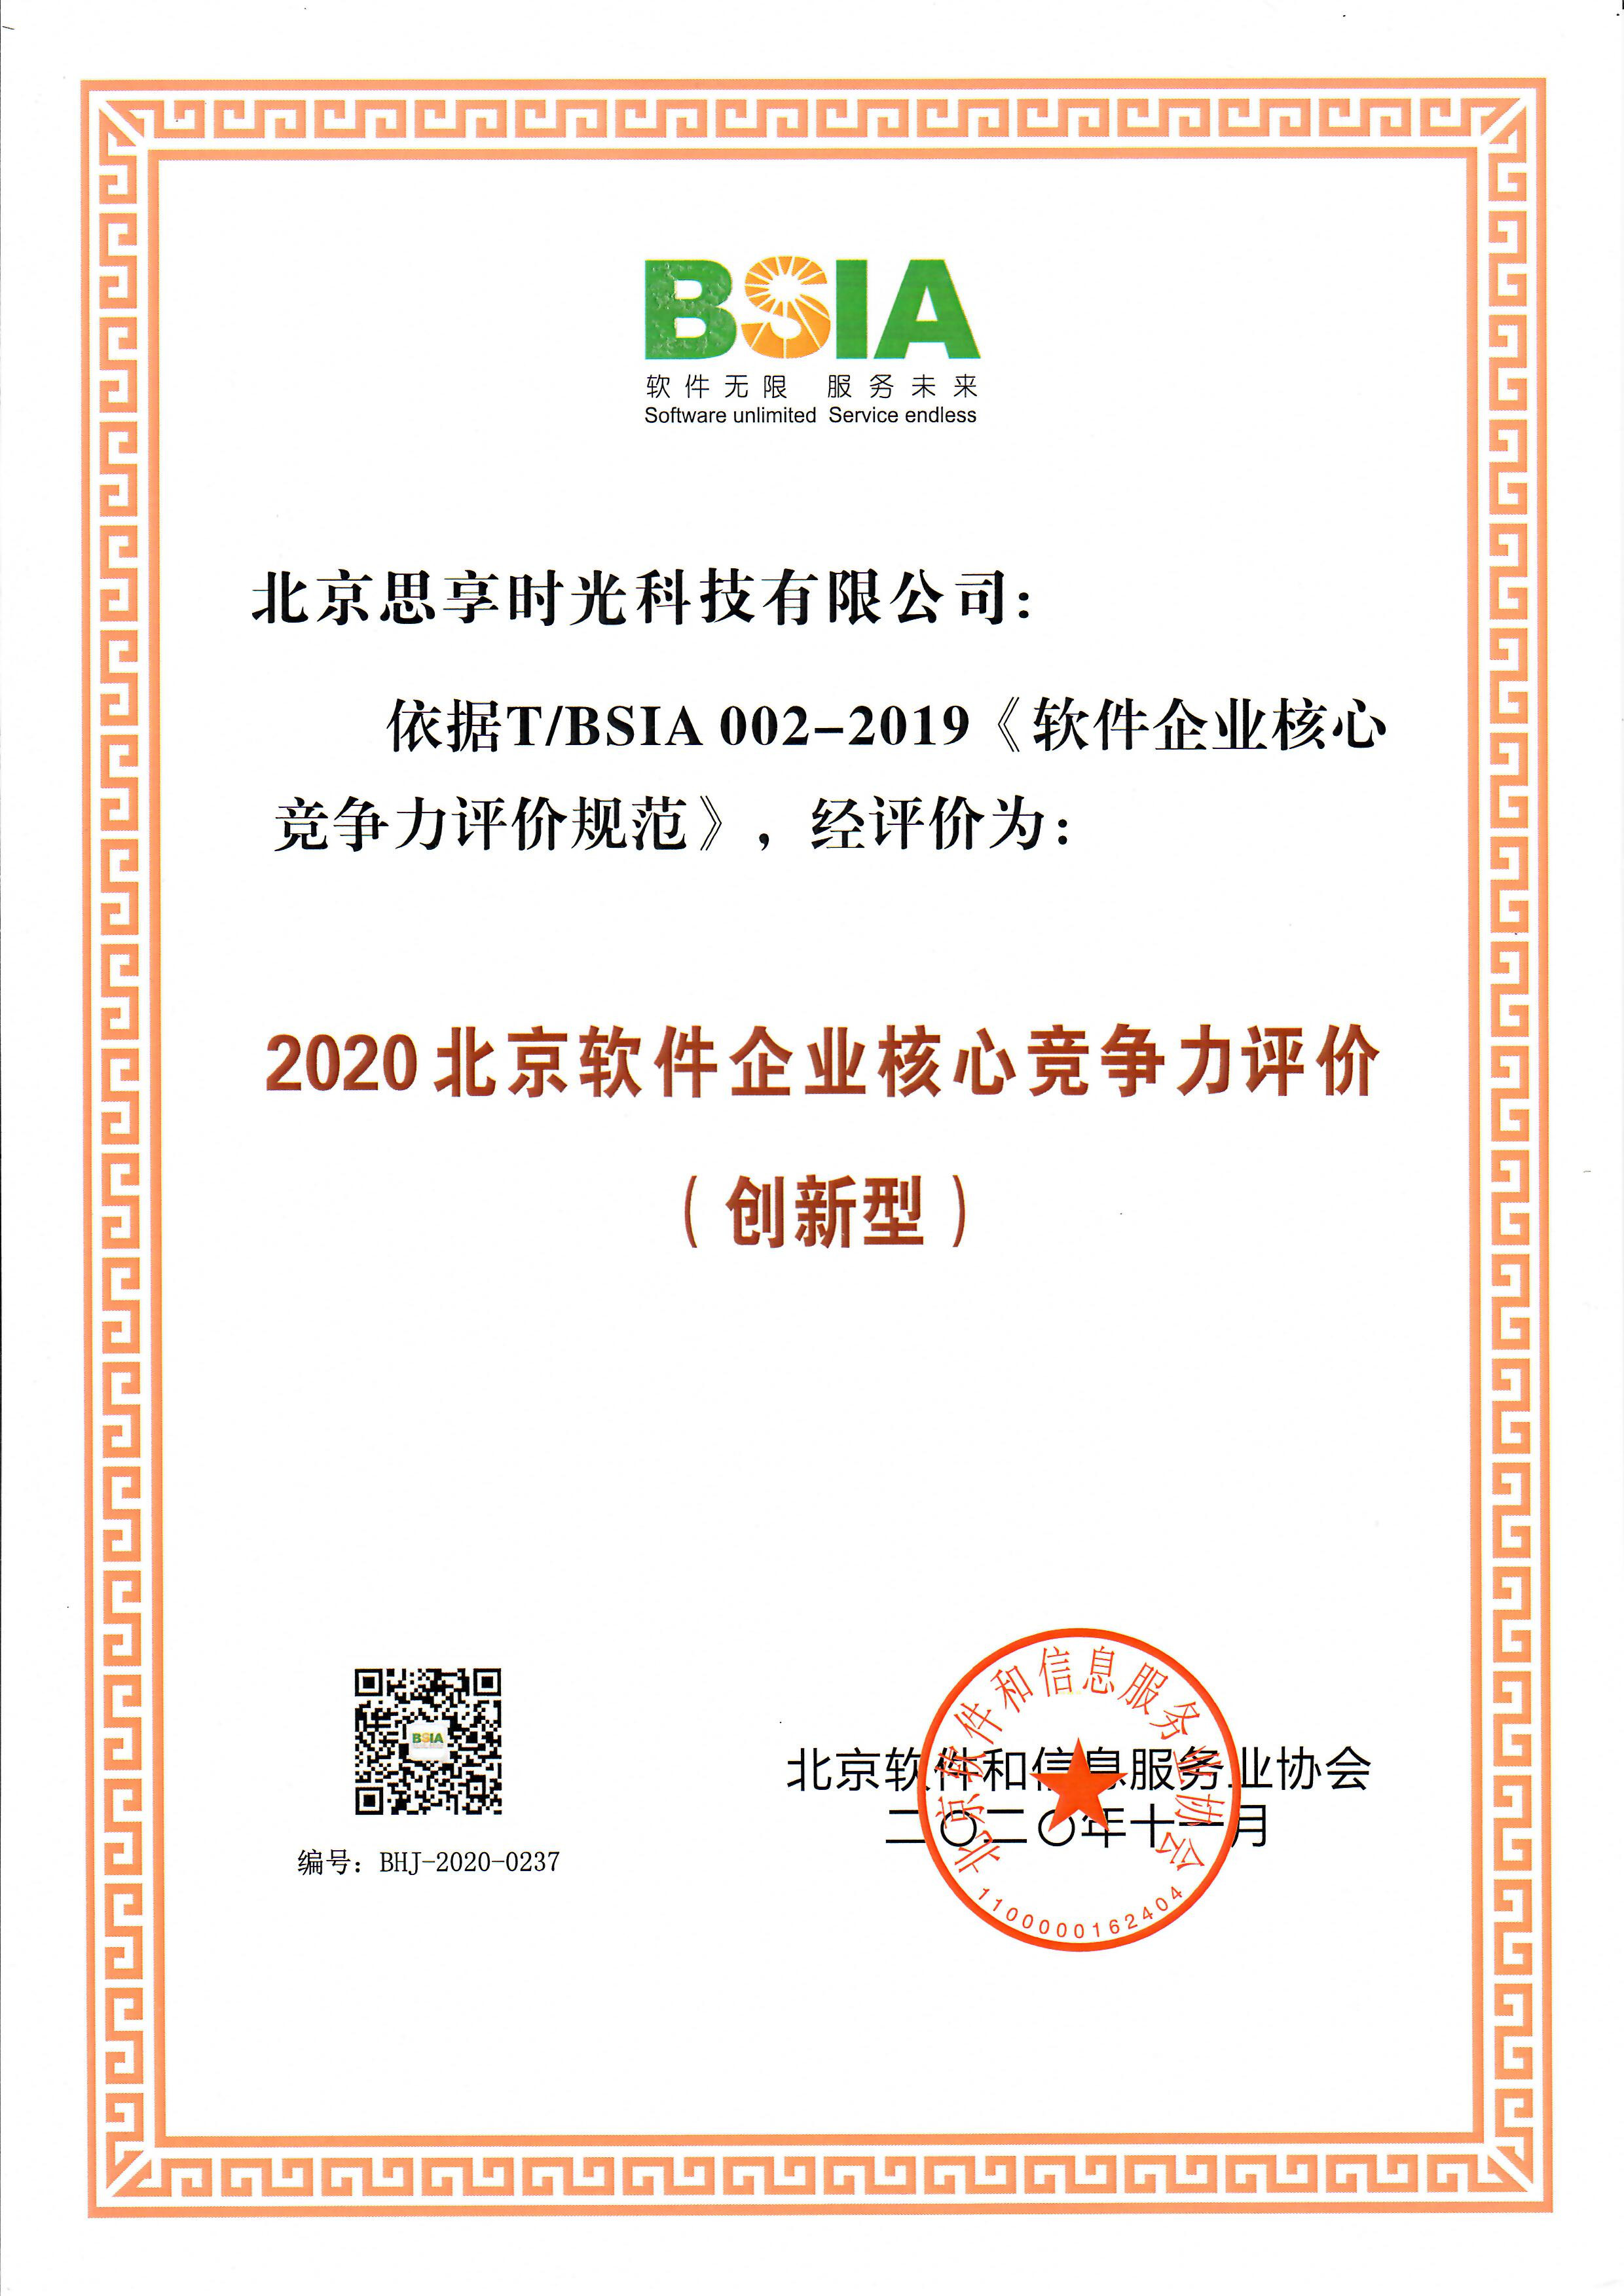                             Beijing Software Enterprise Core Competitiveness Innovation Enterprise 2020
                        